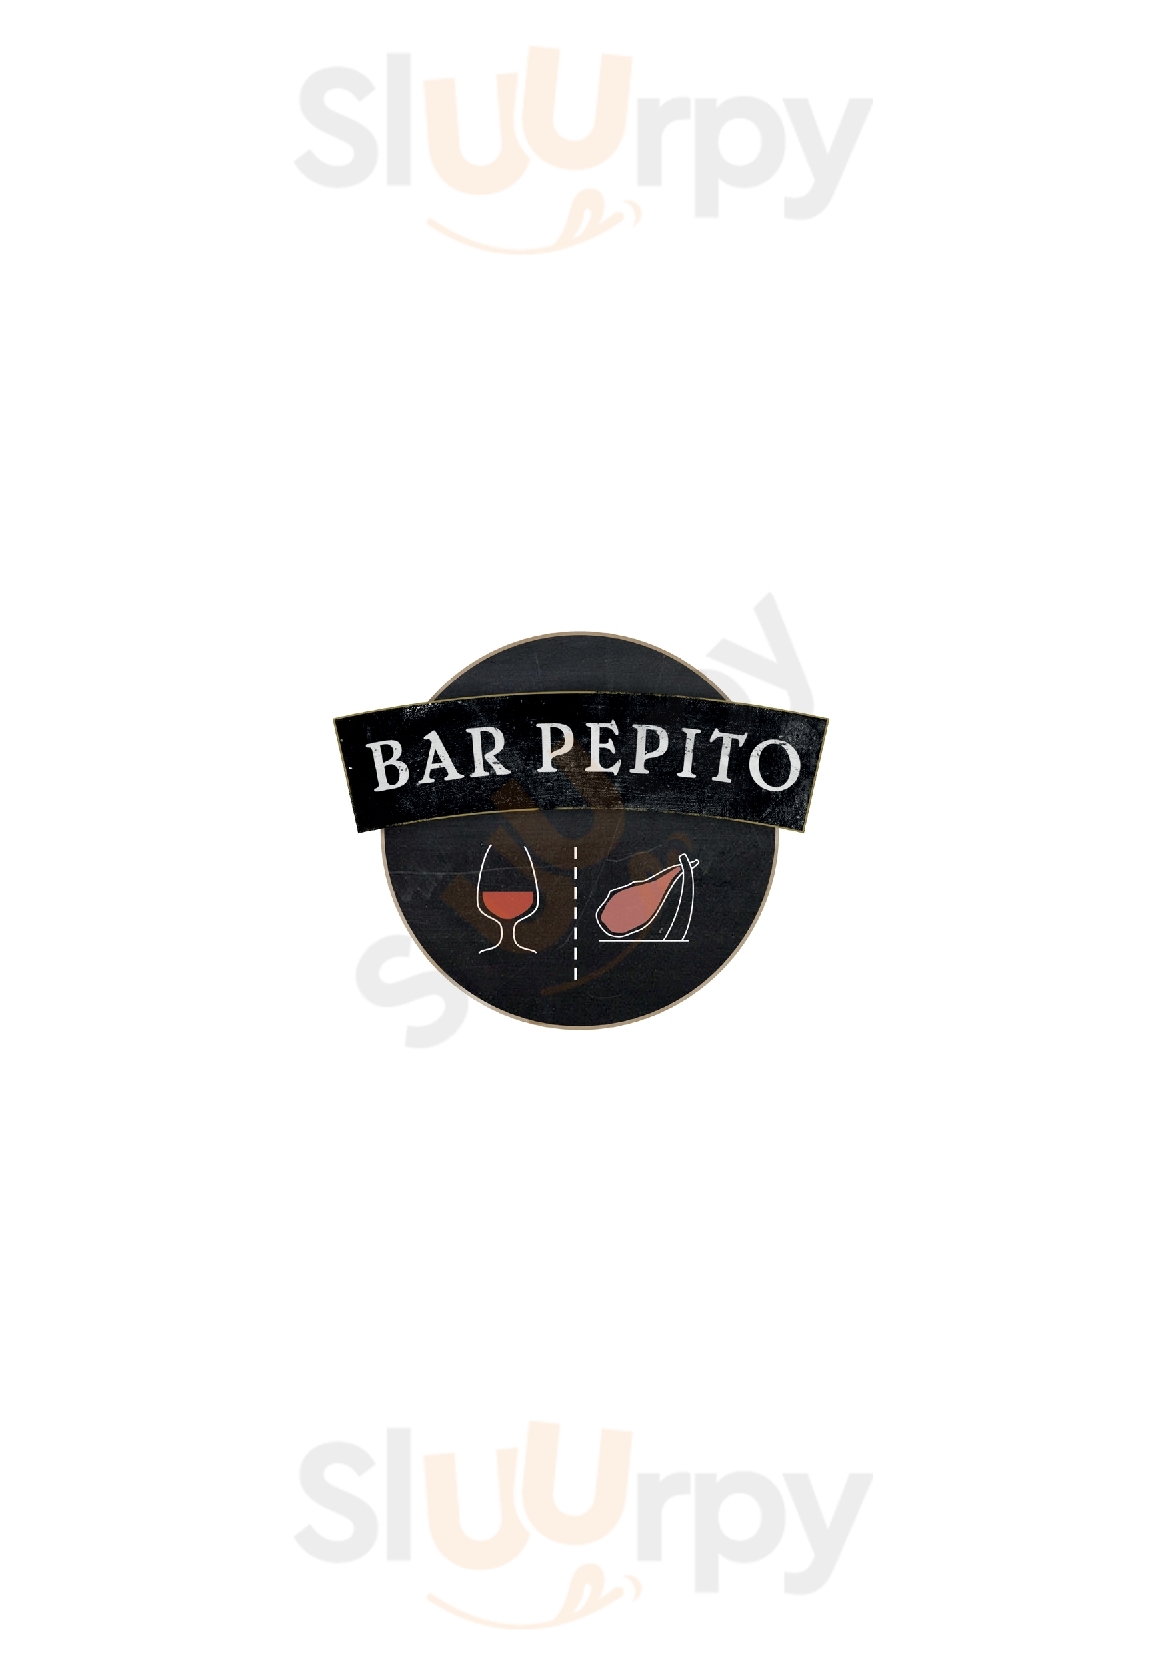 Bar Pepito London Menu - 1